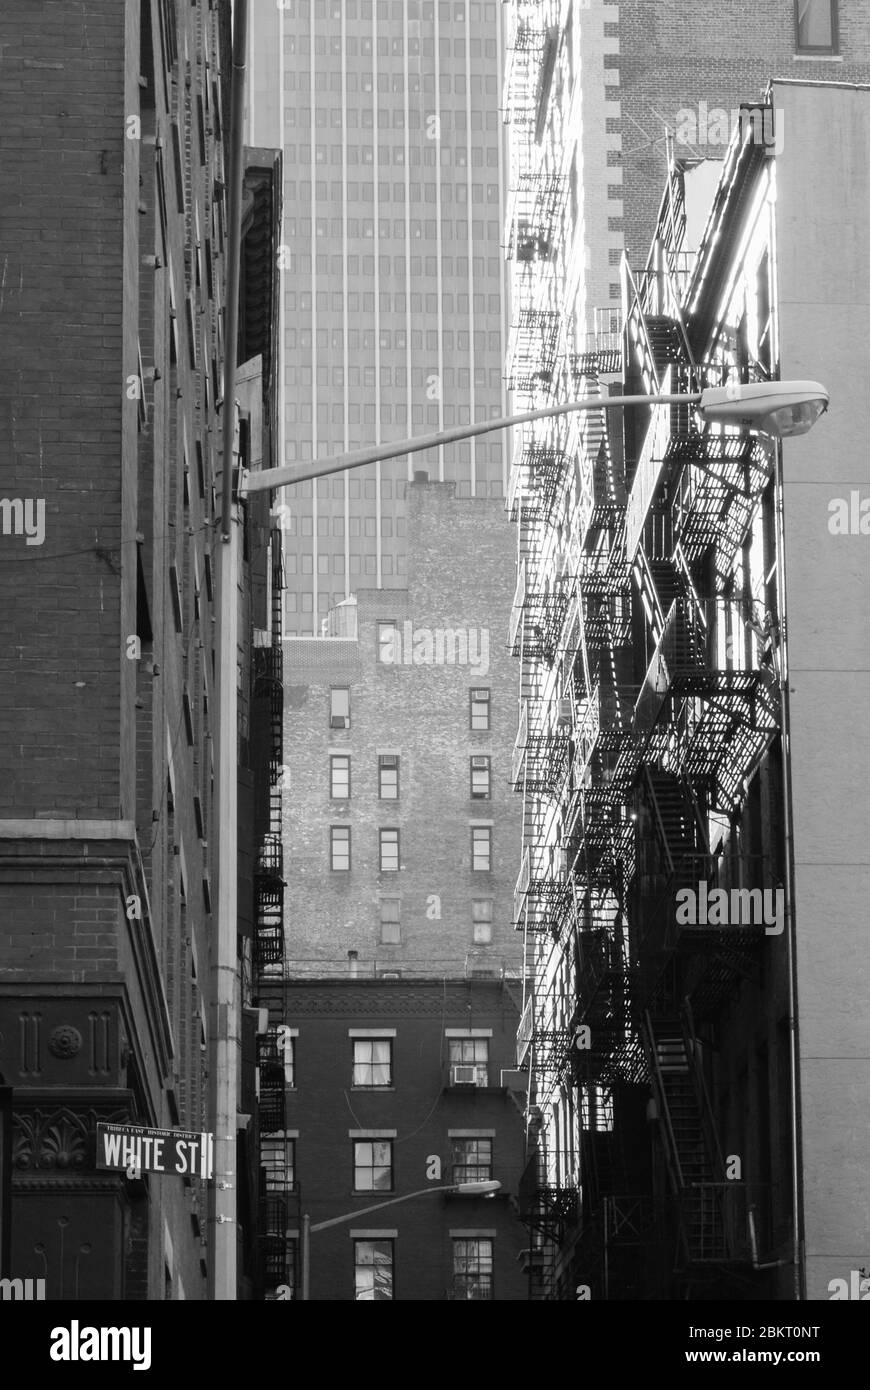 Straßenszene architektonische Details White Street Cortlandt Alley, New York, NY 10013, USA Street Light Reflections Glass Fire Escapes Stockfoto